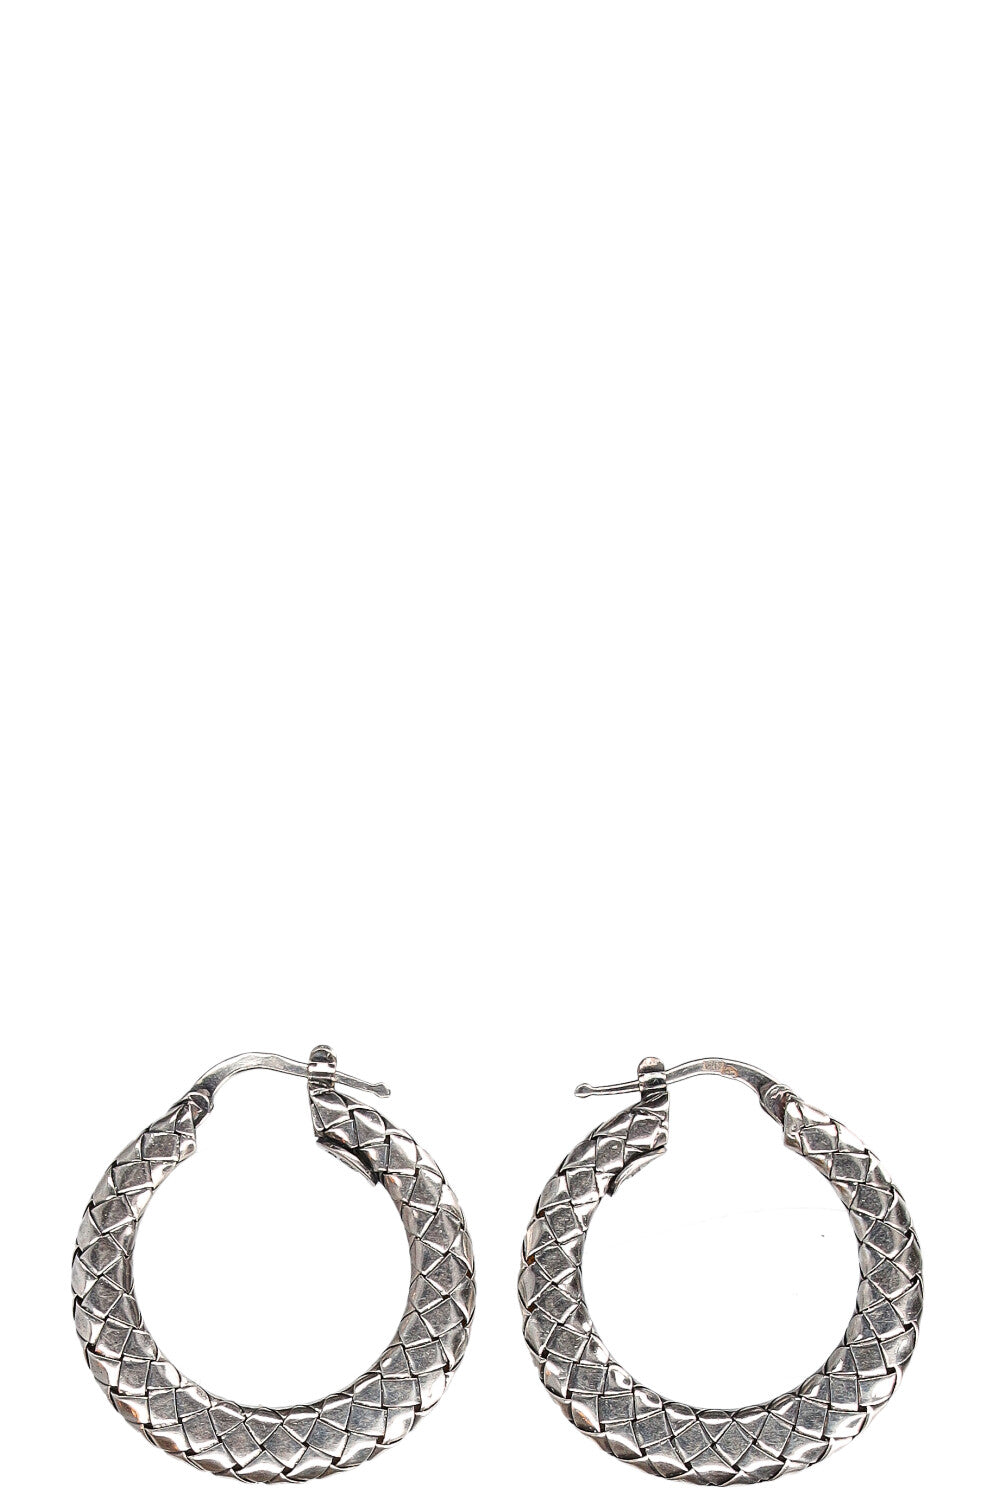 BOTTEGA VENETA Intrecciato Hoop Earrings 925 Silver